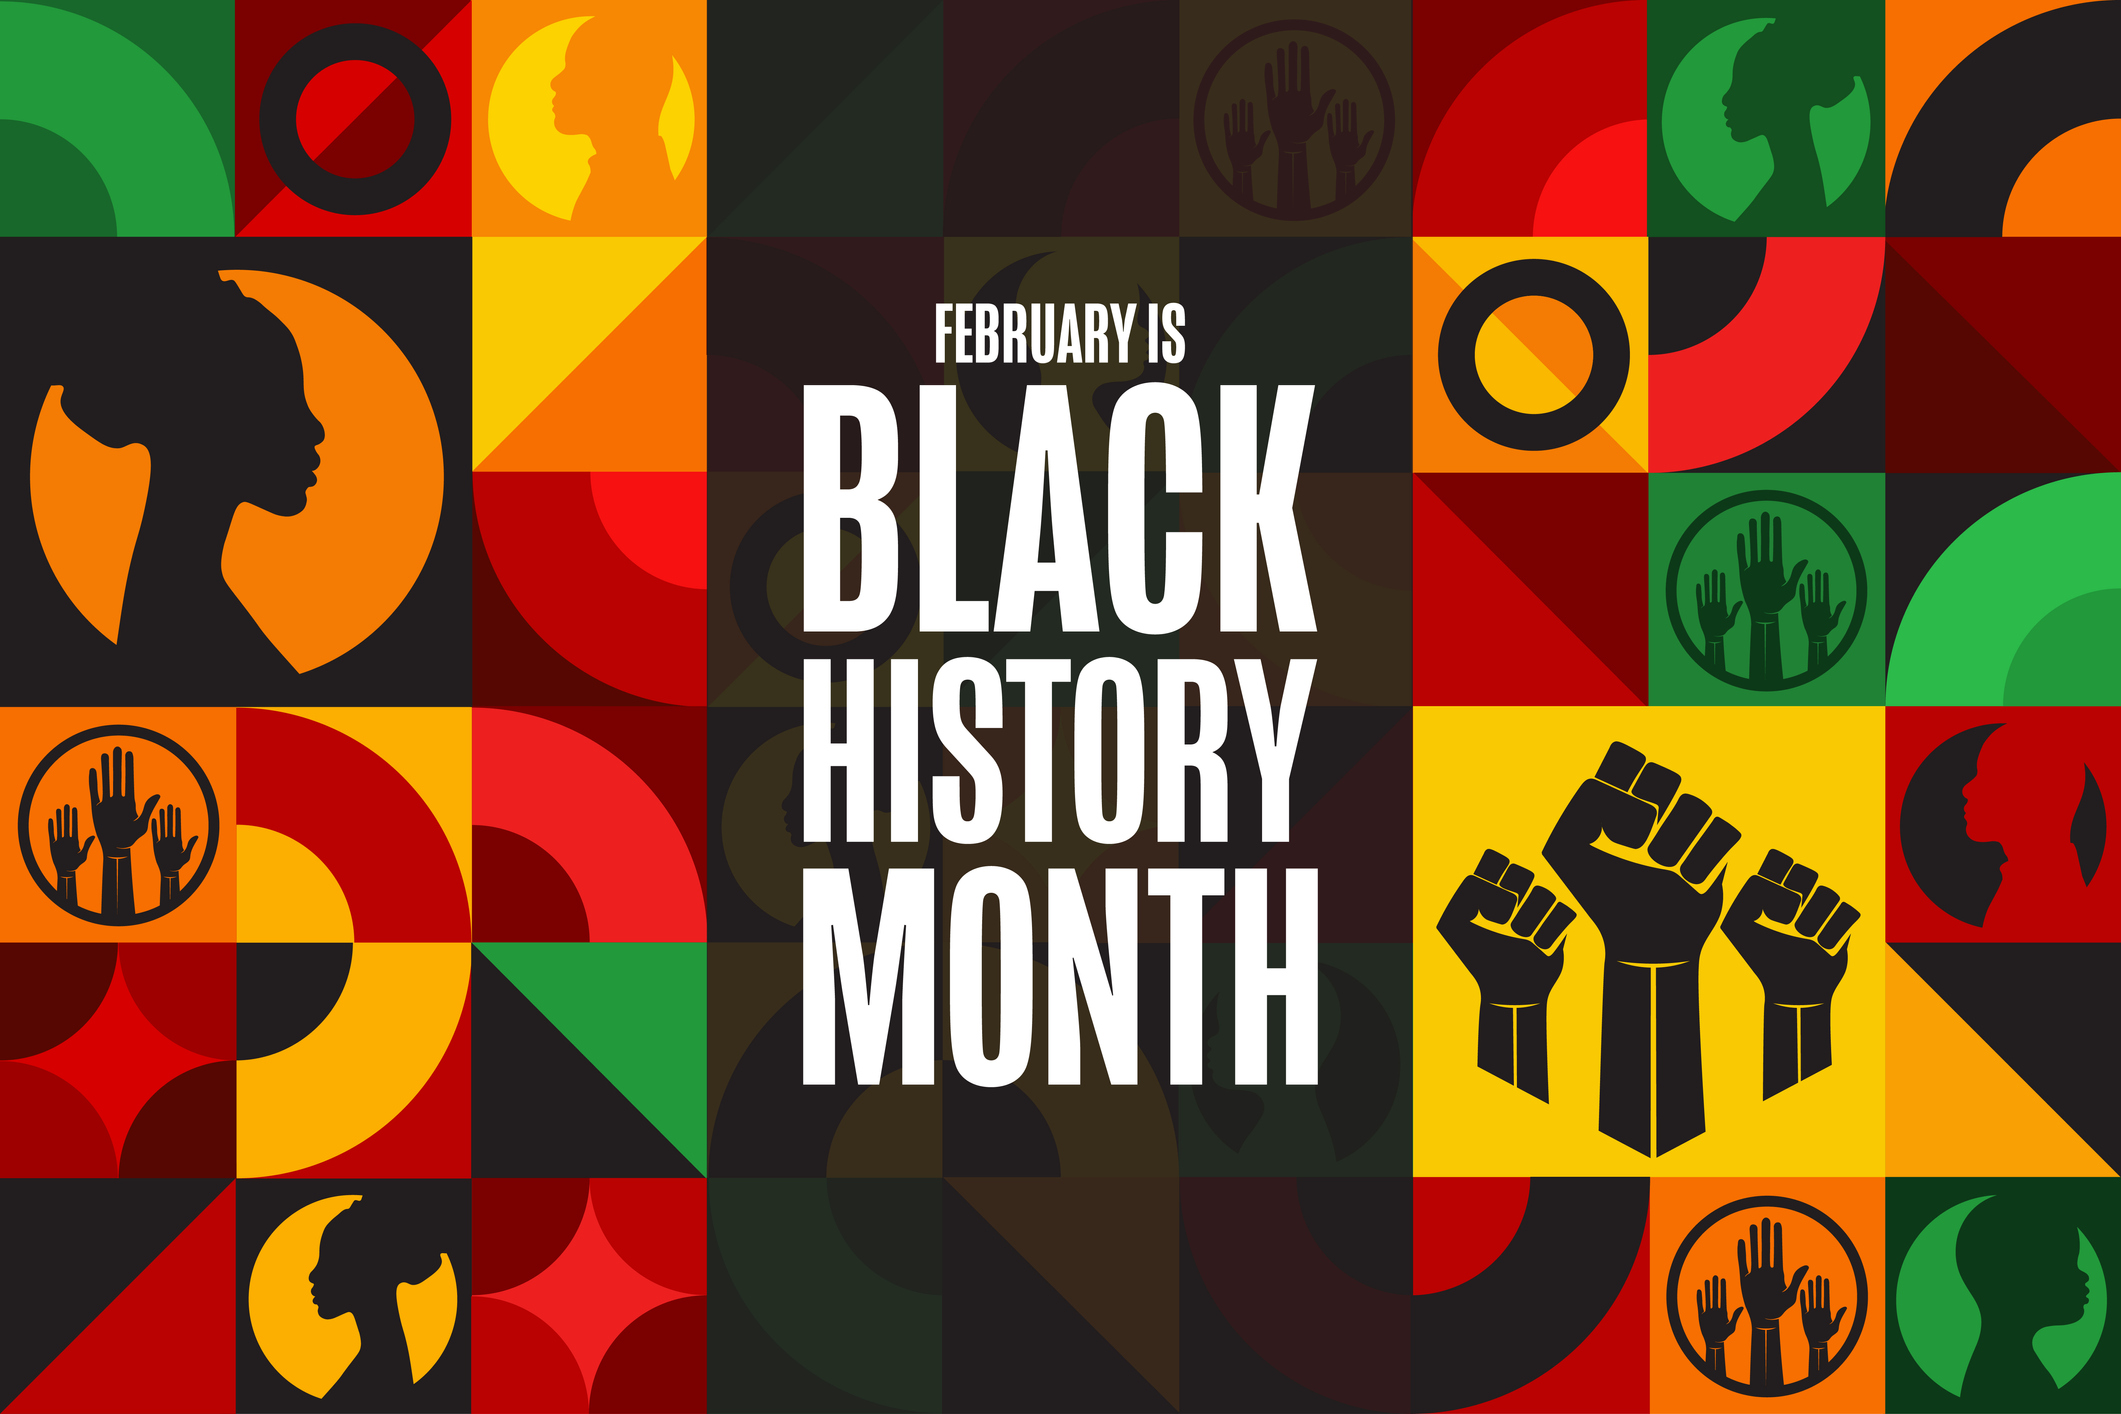 Black History month image